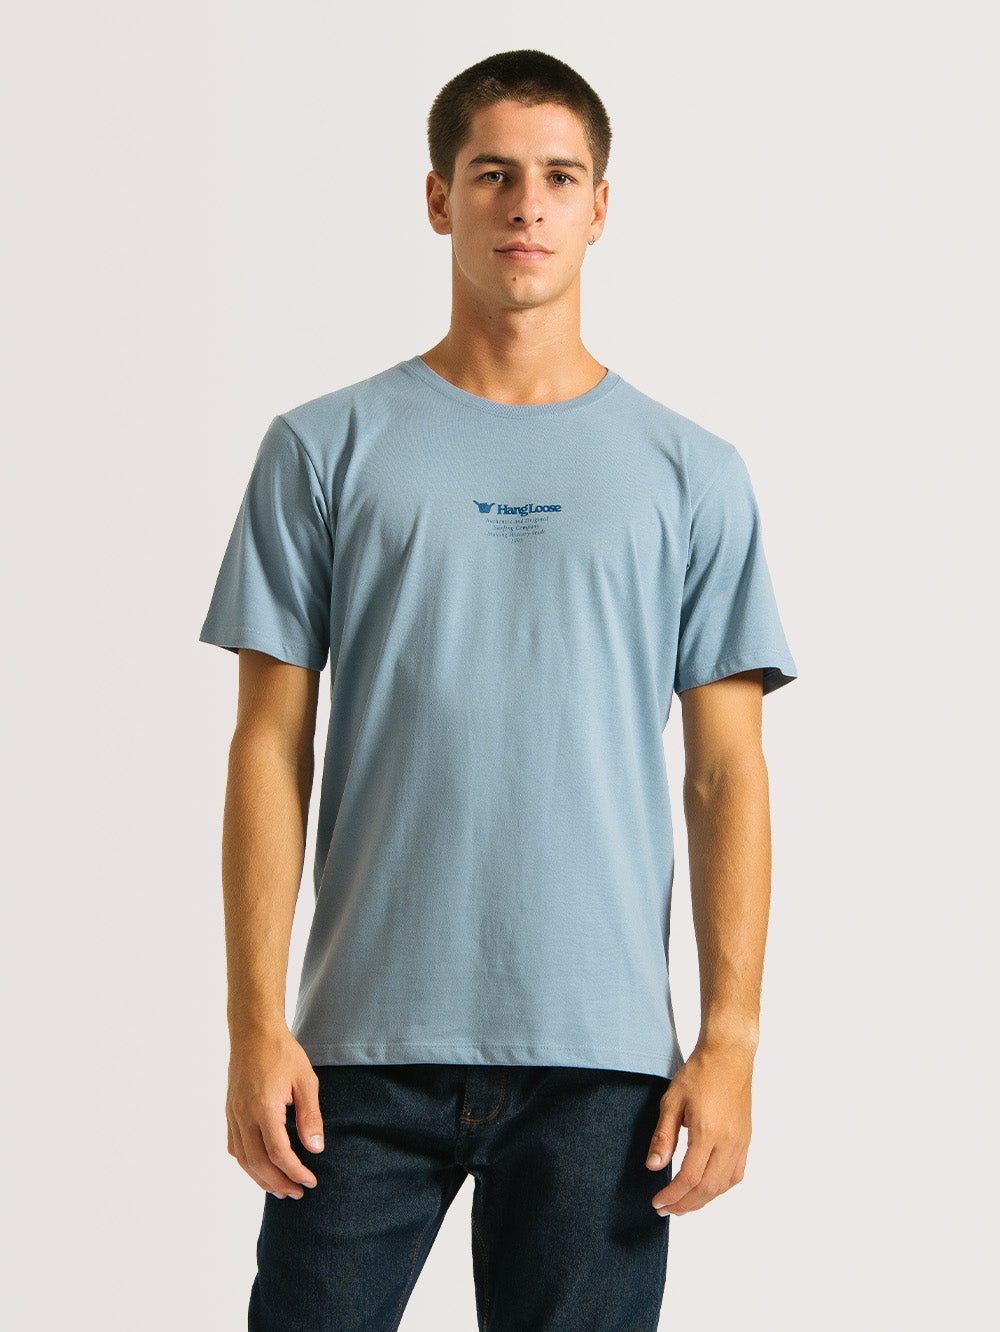 Camiseta Hang Loose  Cacimba Azul